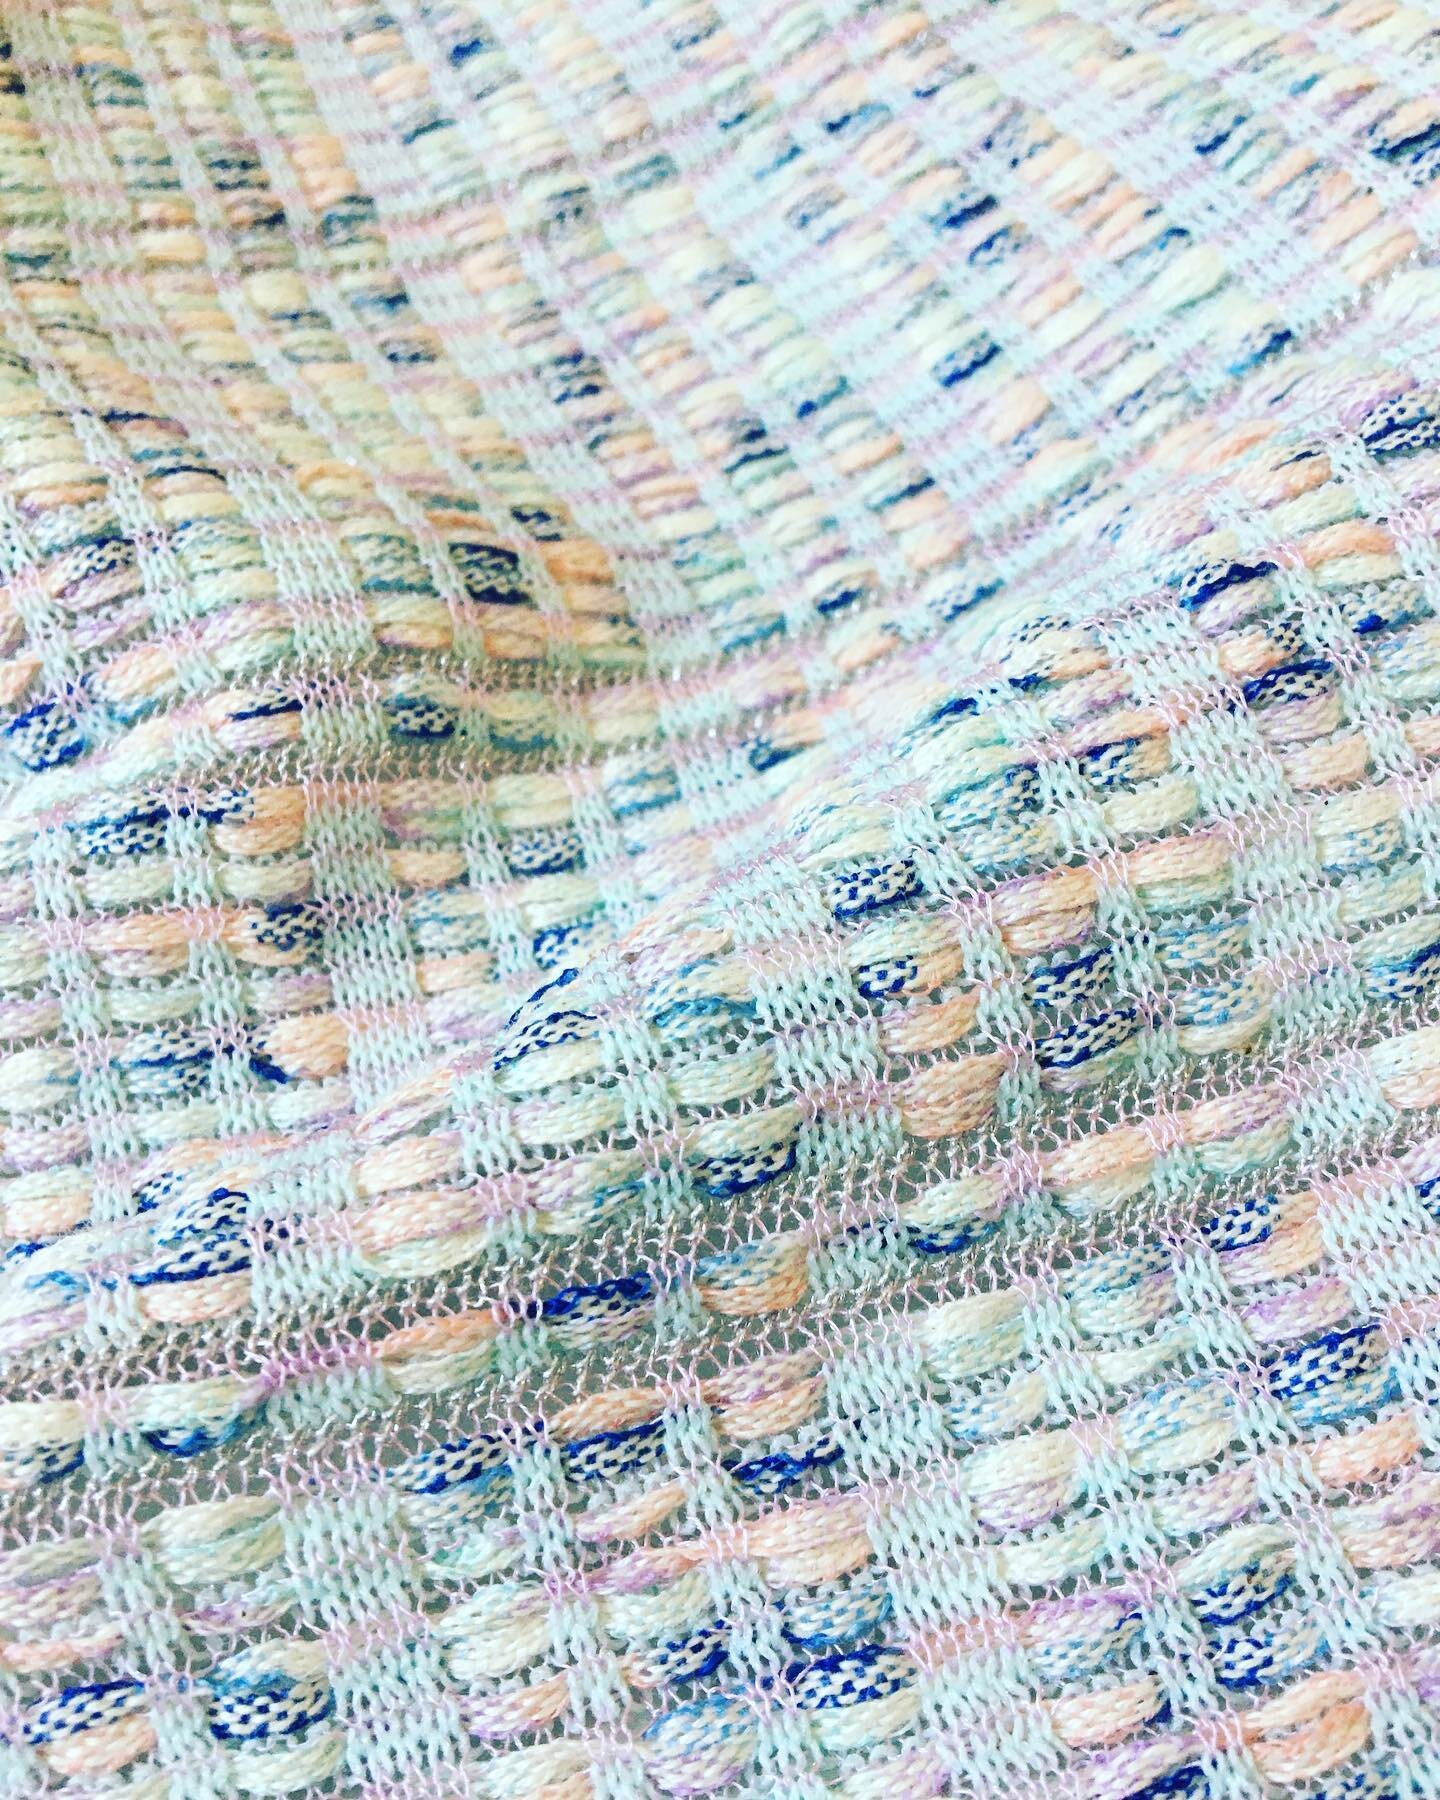 Candy Weaves 🍬 
Made by MRC

#knitwear
#shimaseiki
#mrcknitwear
#artisanal
#madeinItaly
#innovation
#textiles
#technicaltextiles
#maglieria
#candy